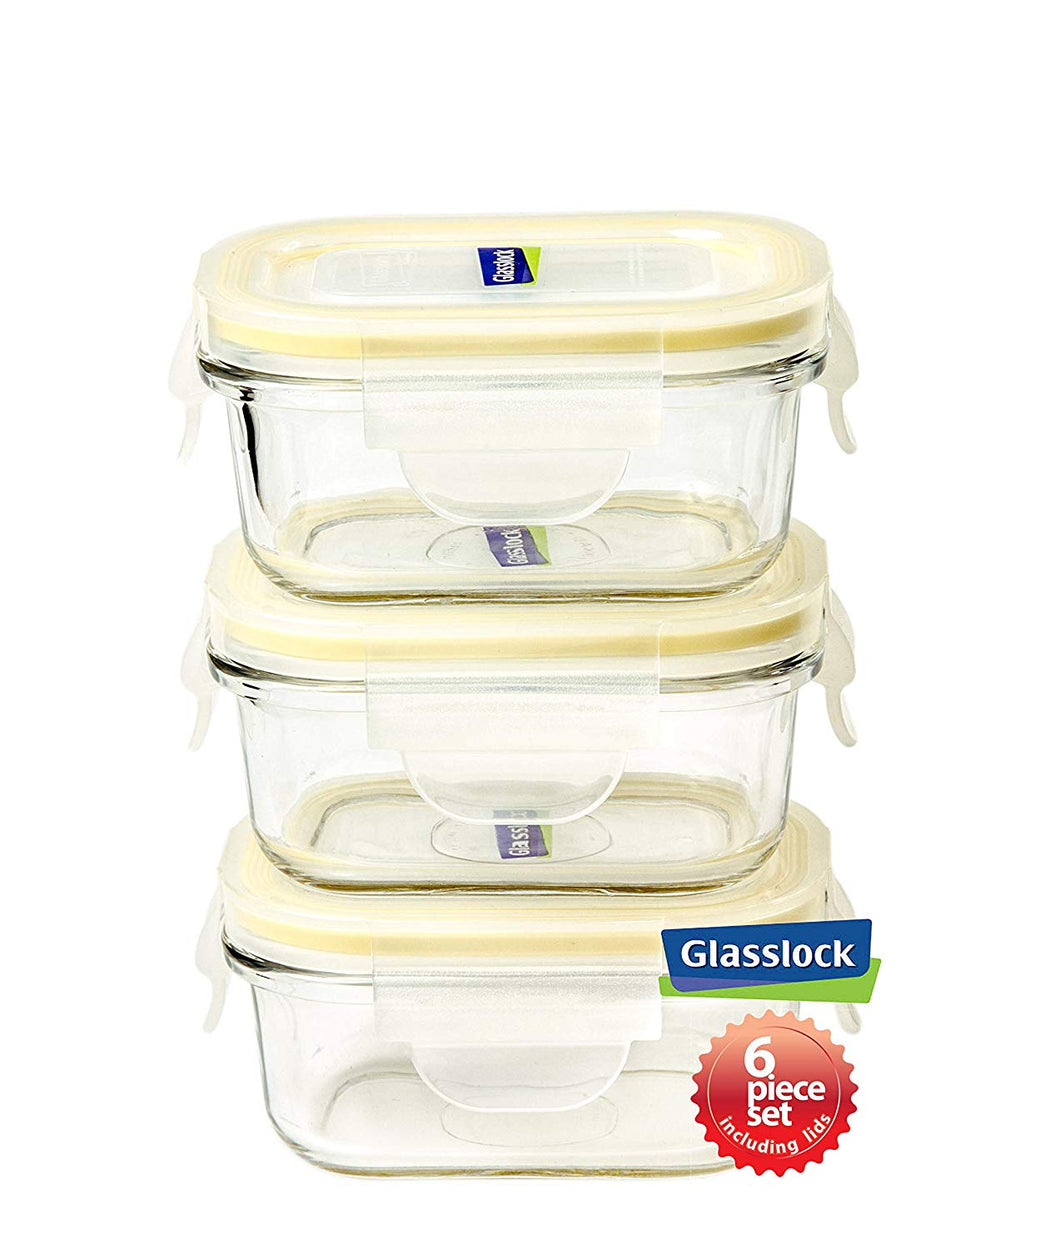 Glasslock Food-Storage Container with Locking Lids Microwave Safe 6pcs Set Rectangular 5oz Yum